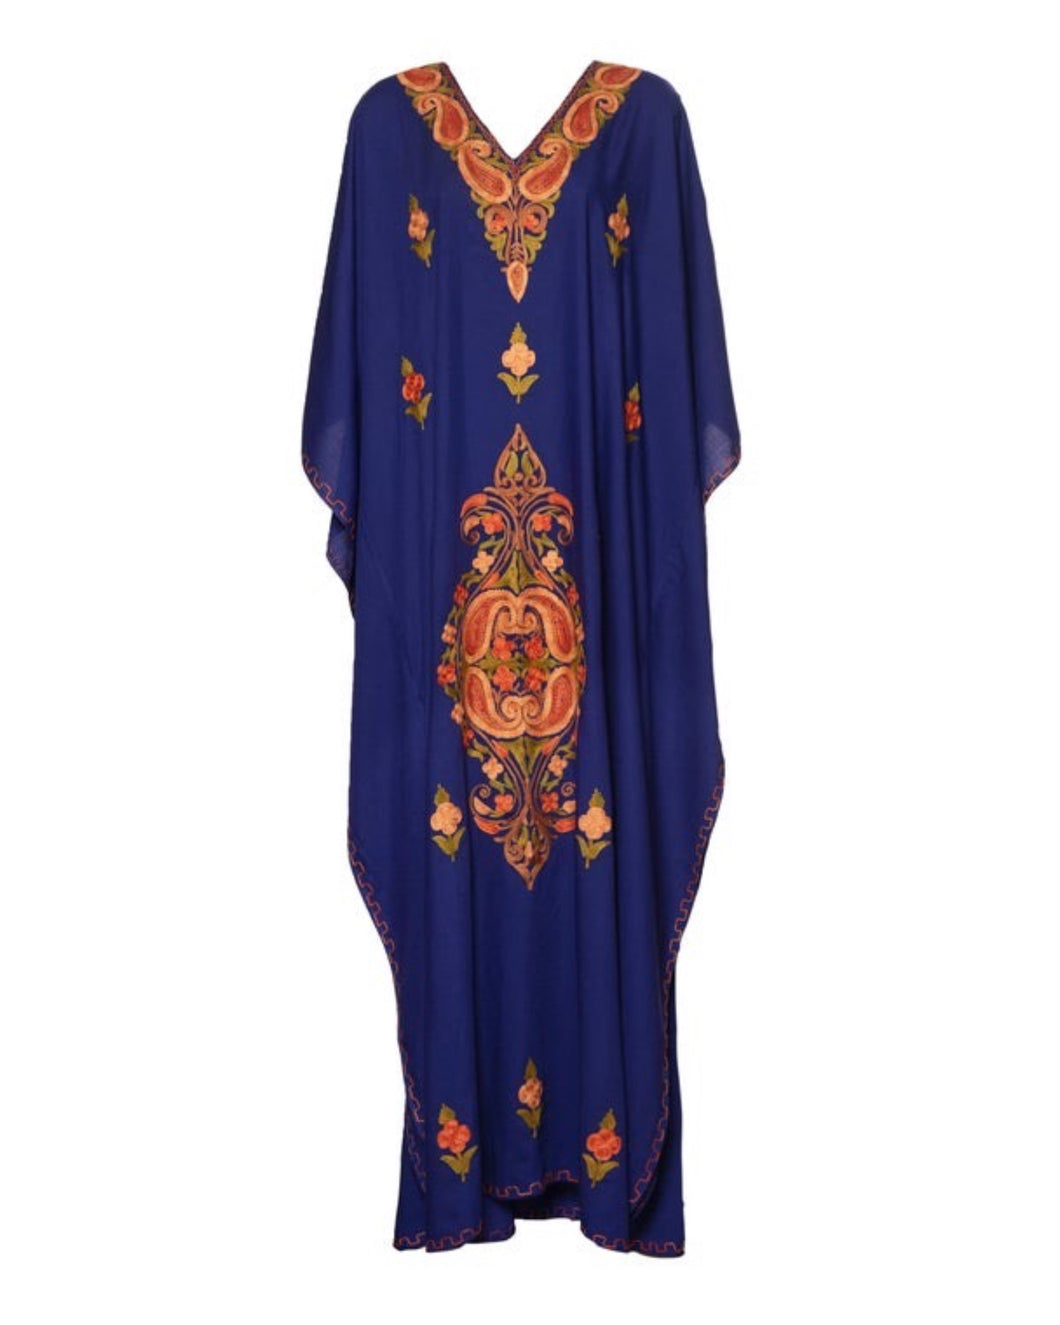 Kaftan Dress (Violet with Red Flowers)